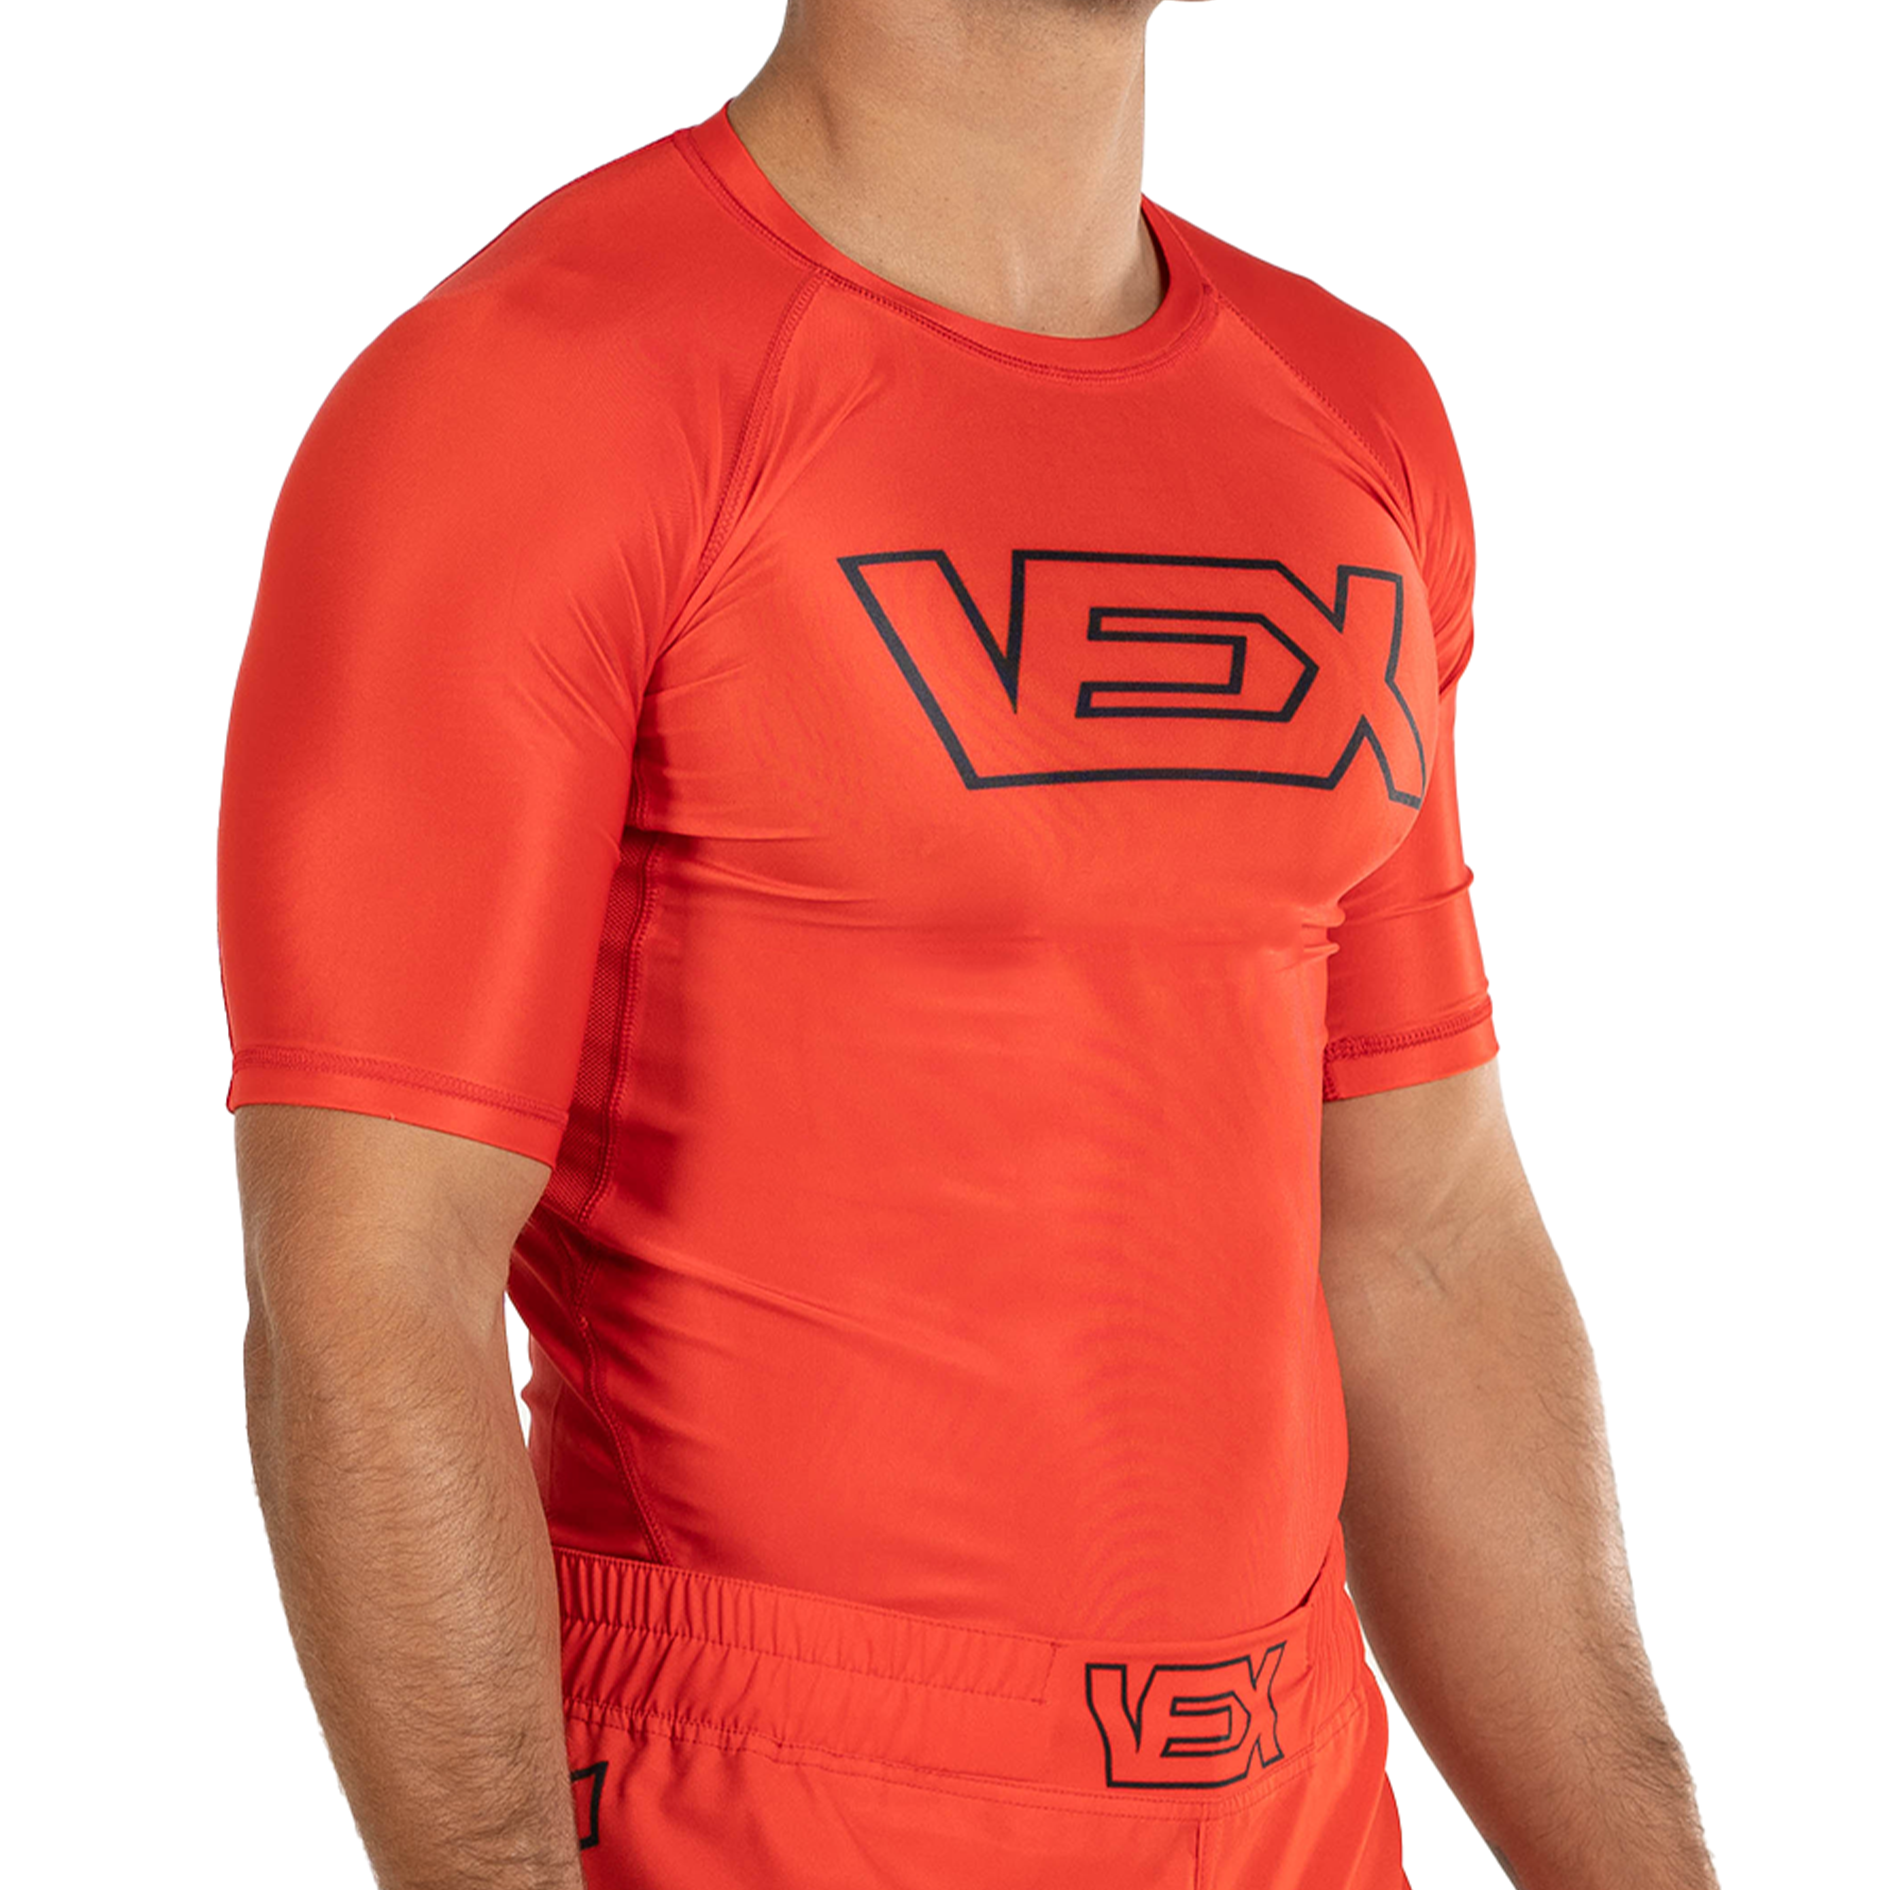 VEX Short Sleeve Rash Guard (RED)